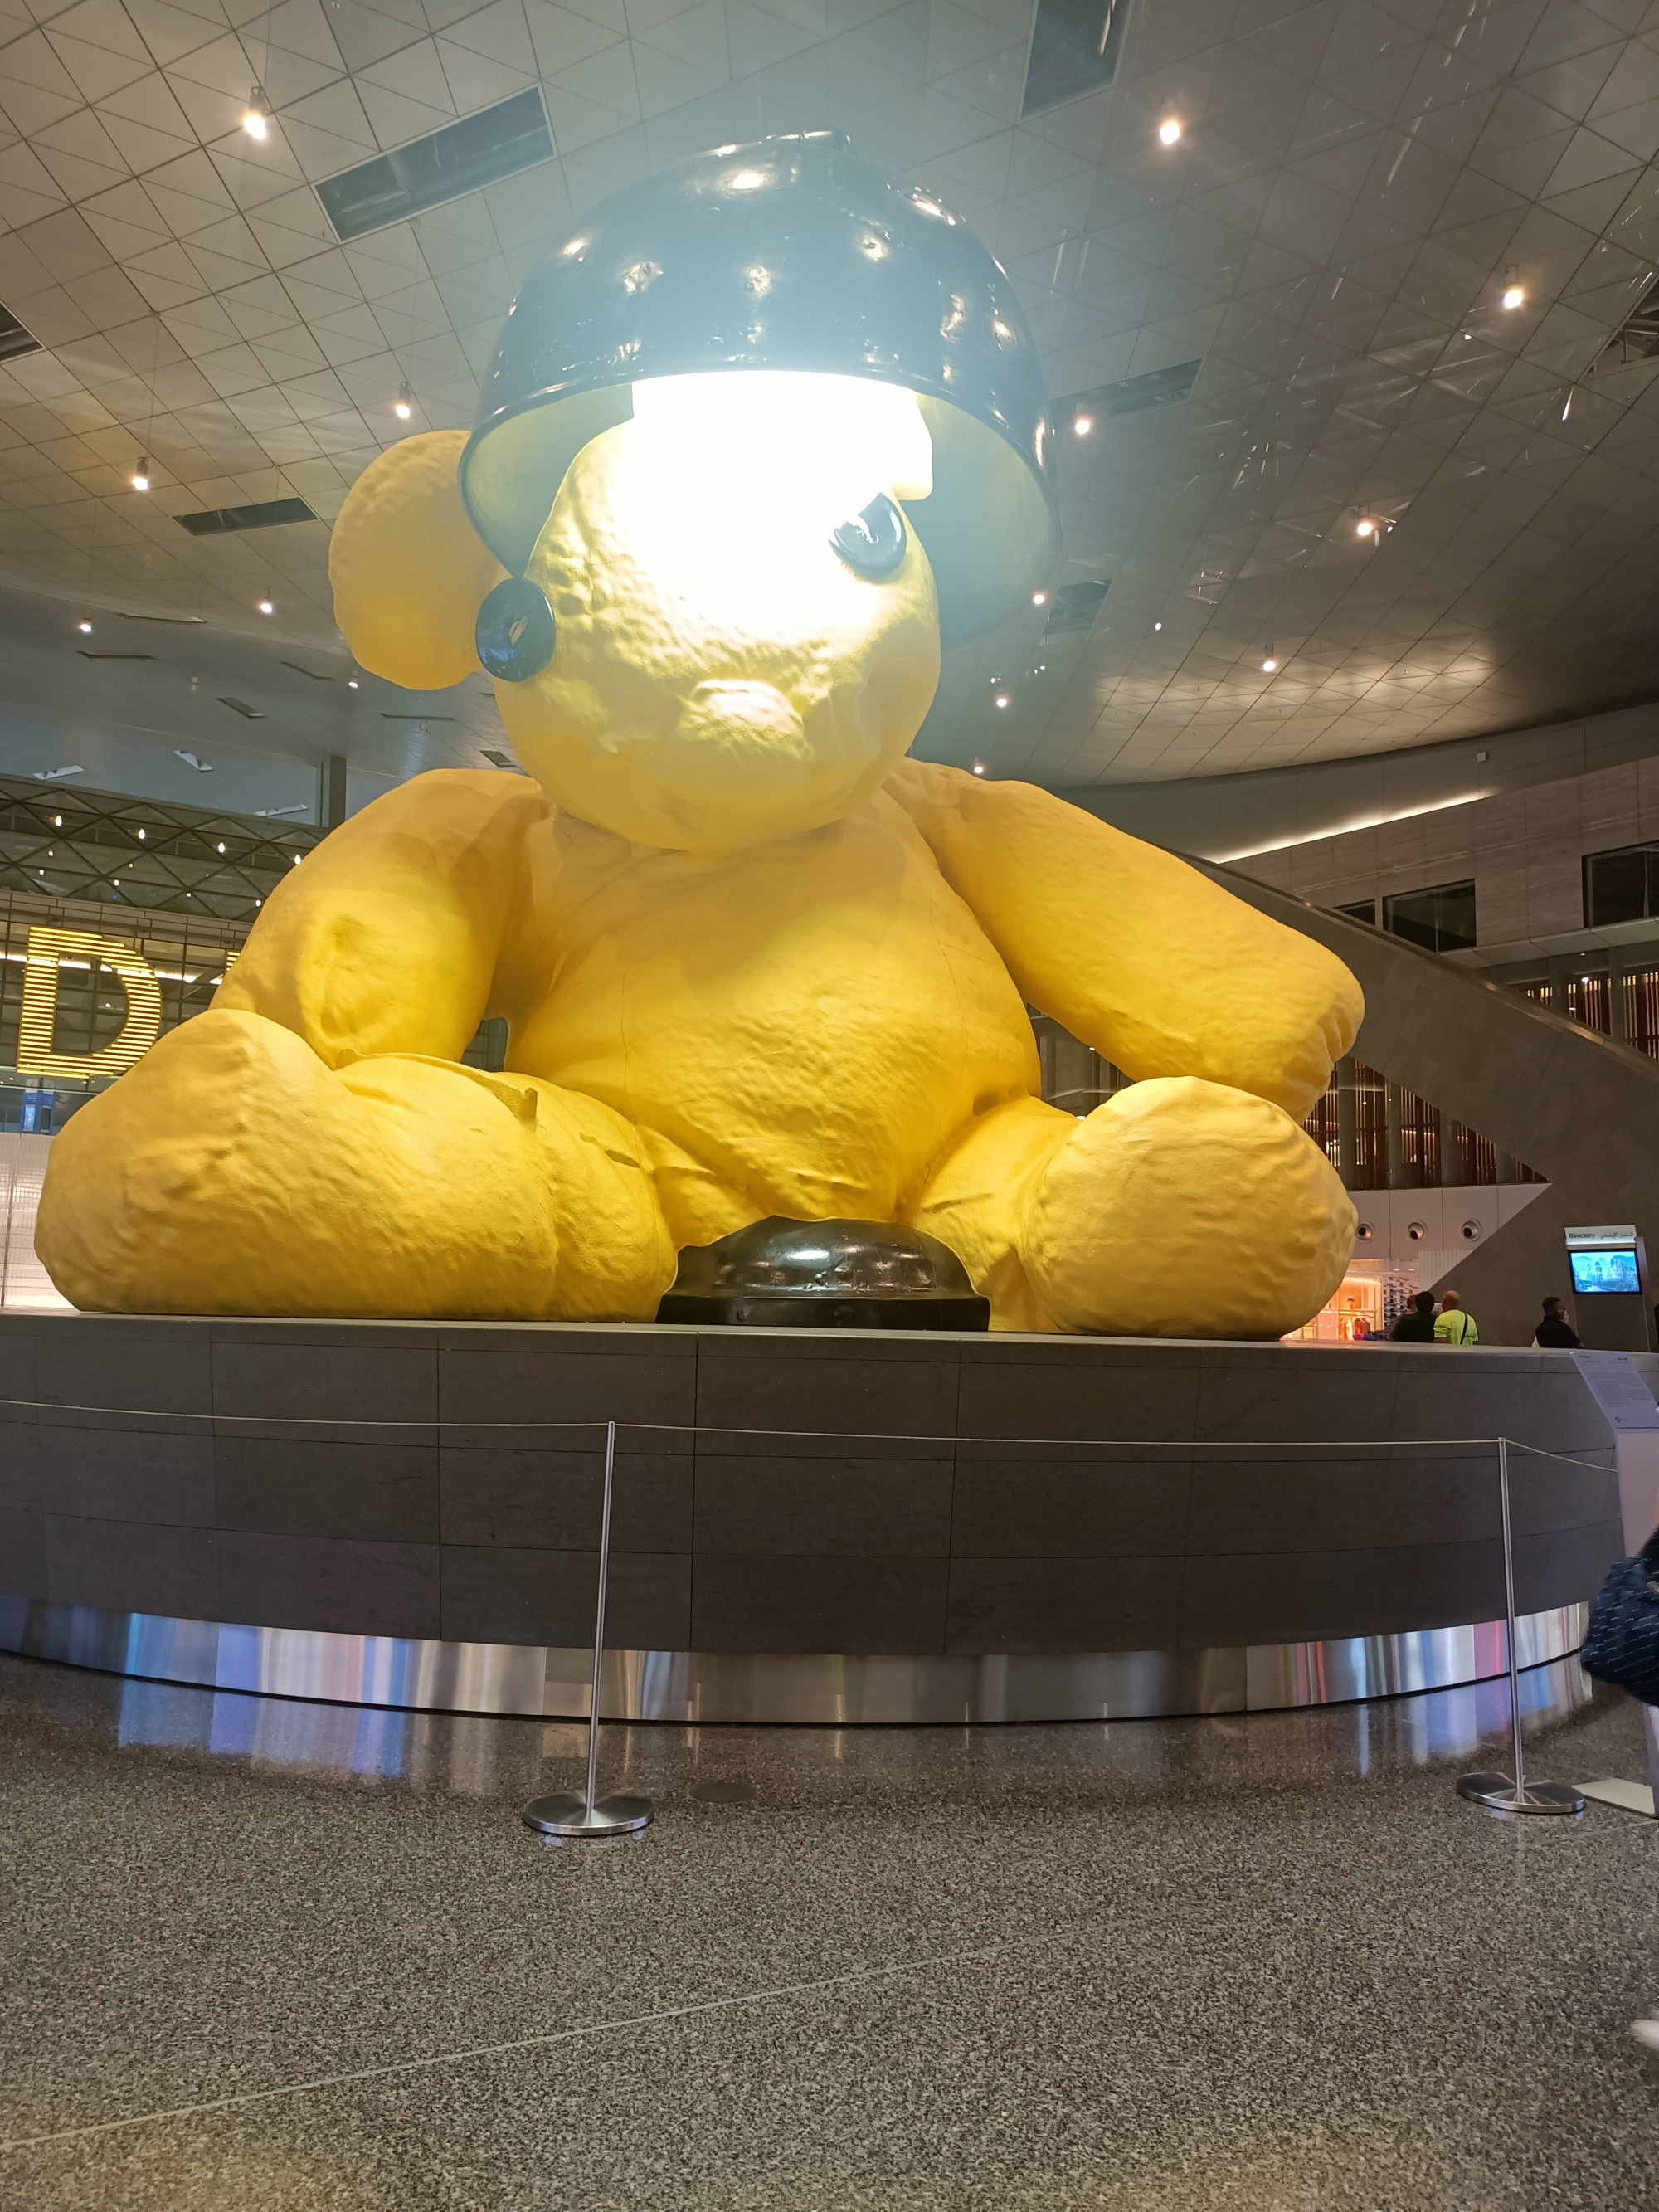 Doha International Airport, Qatar